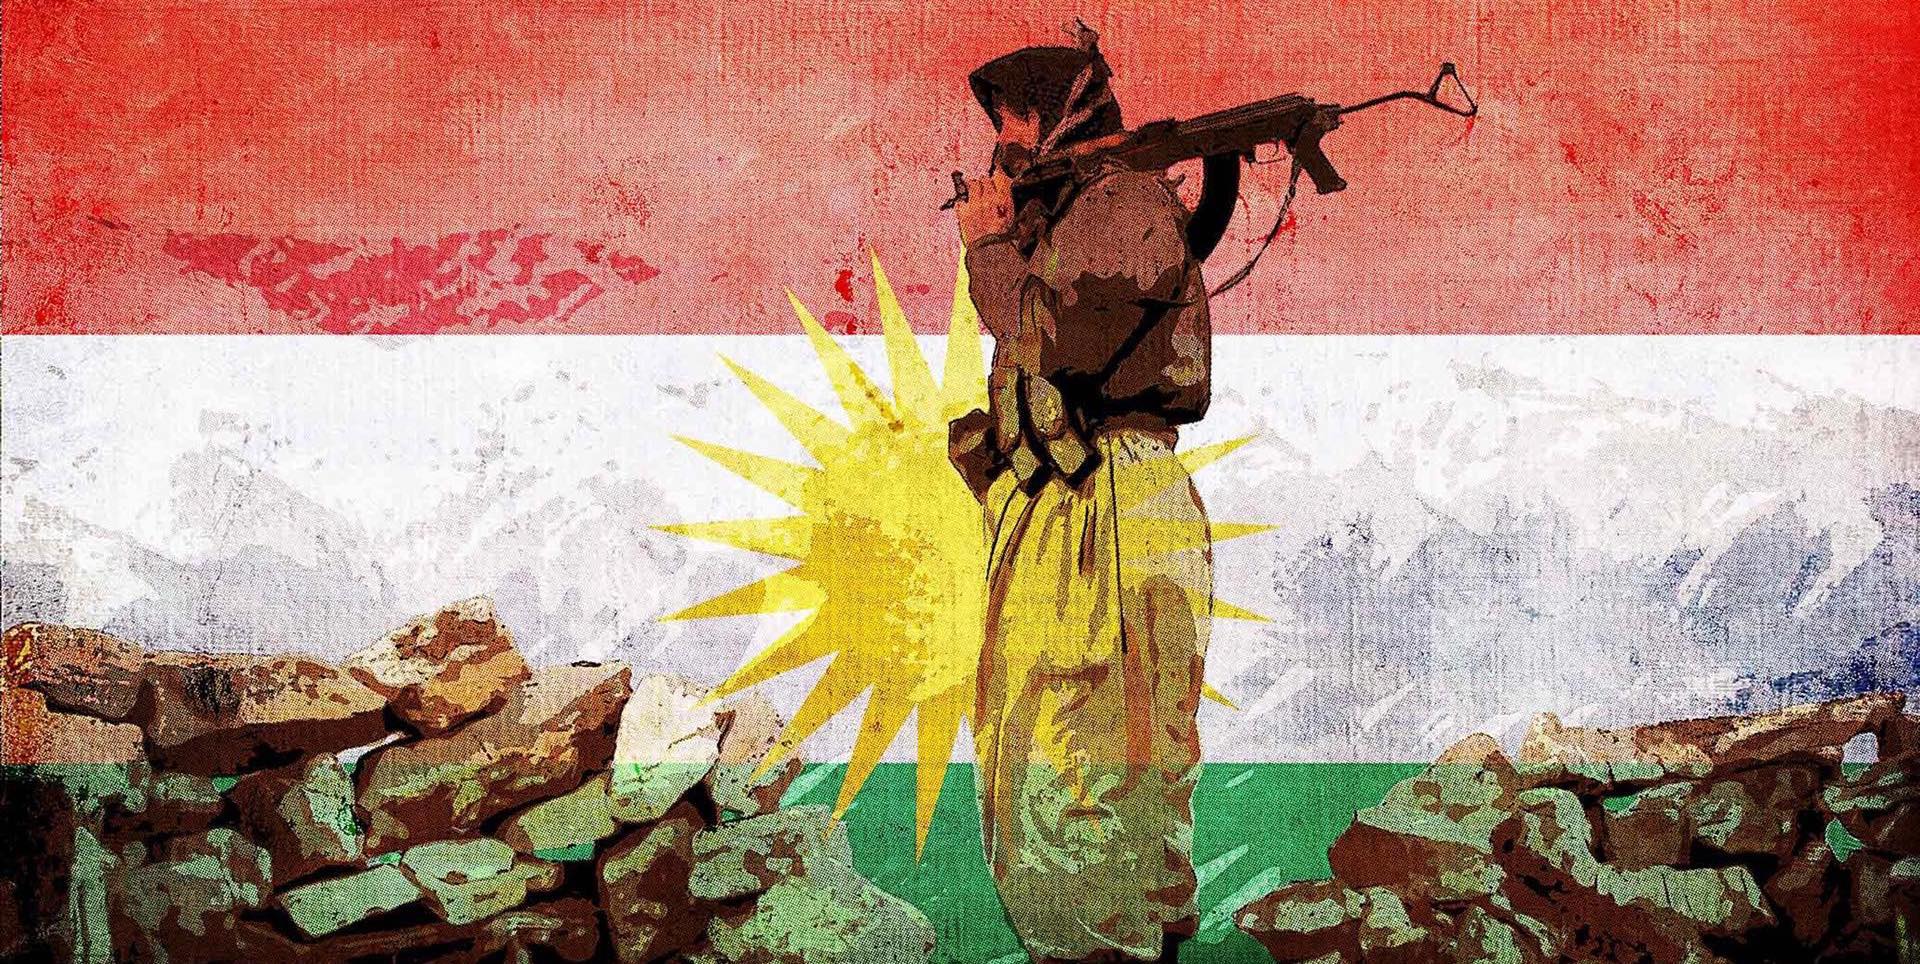 The Kurdish Problem